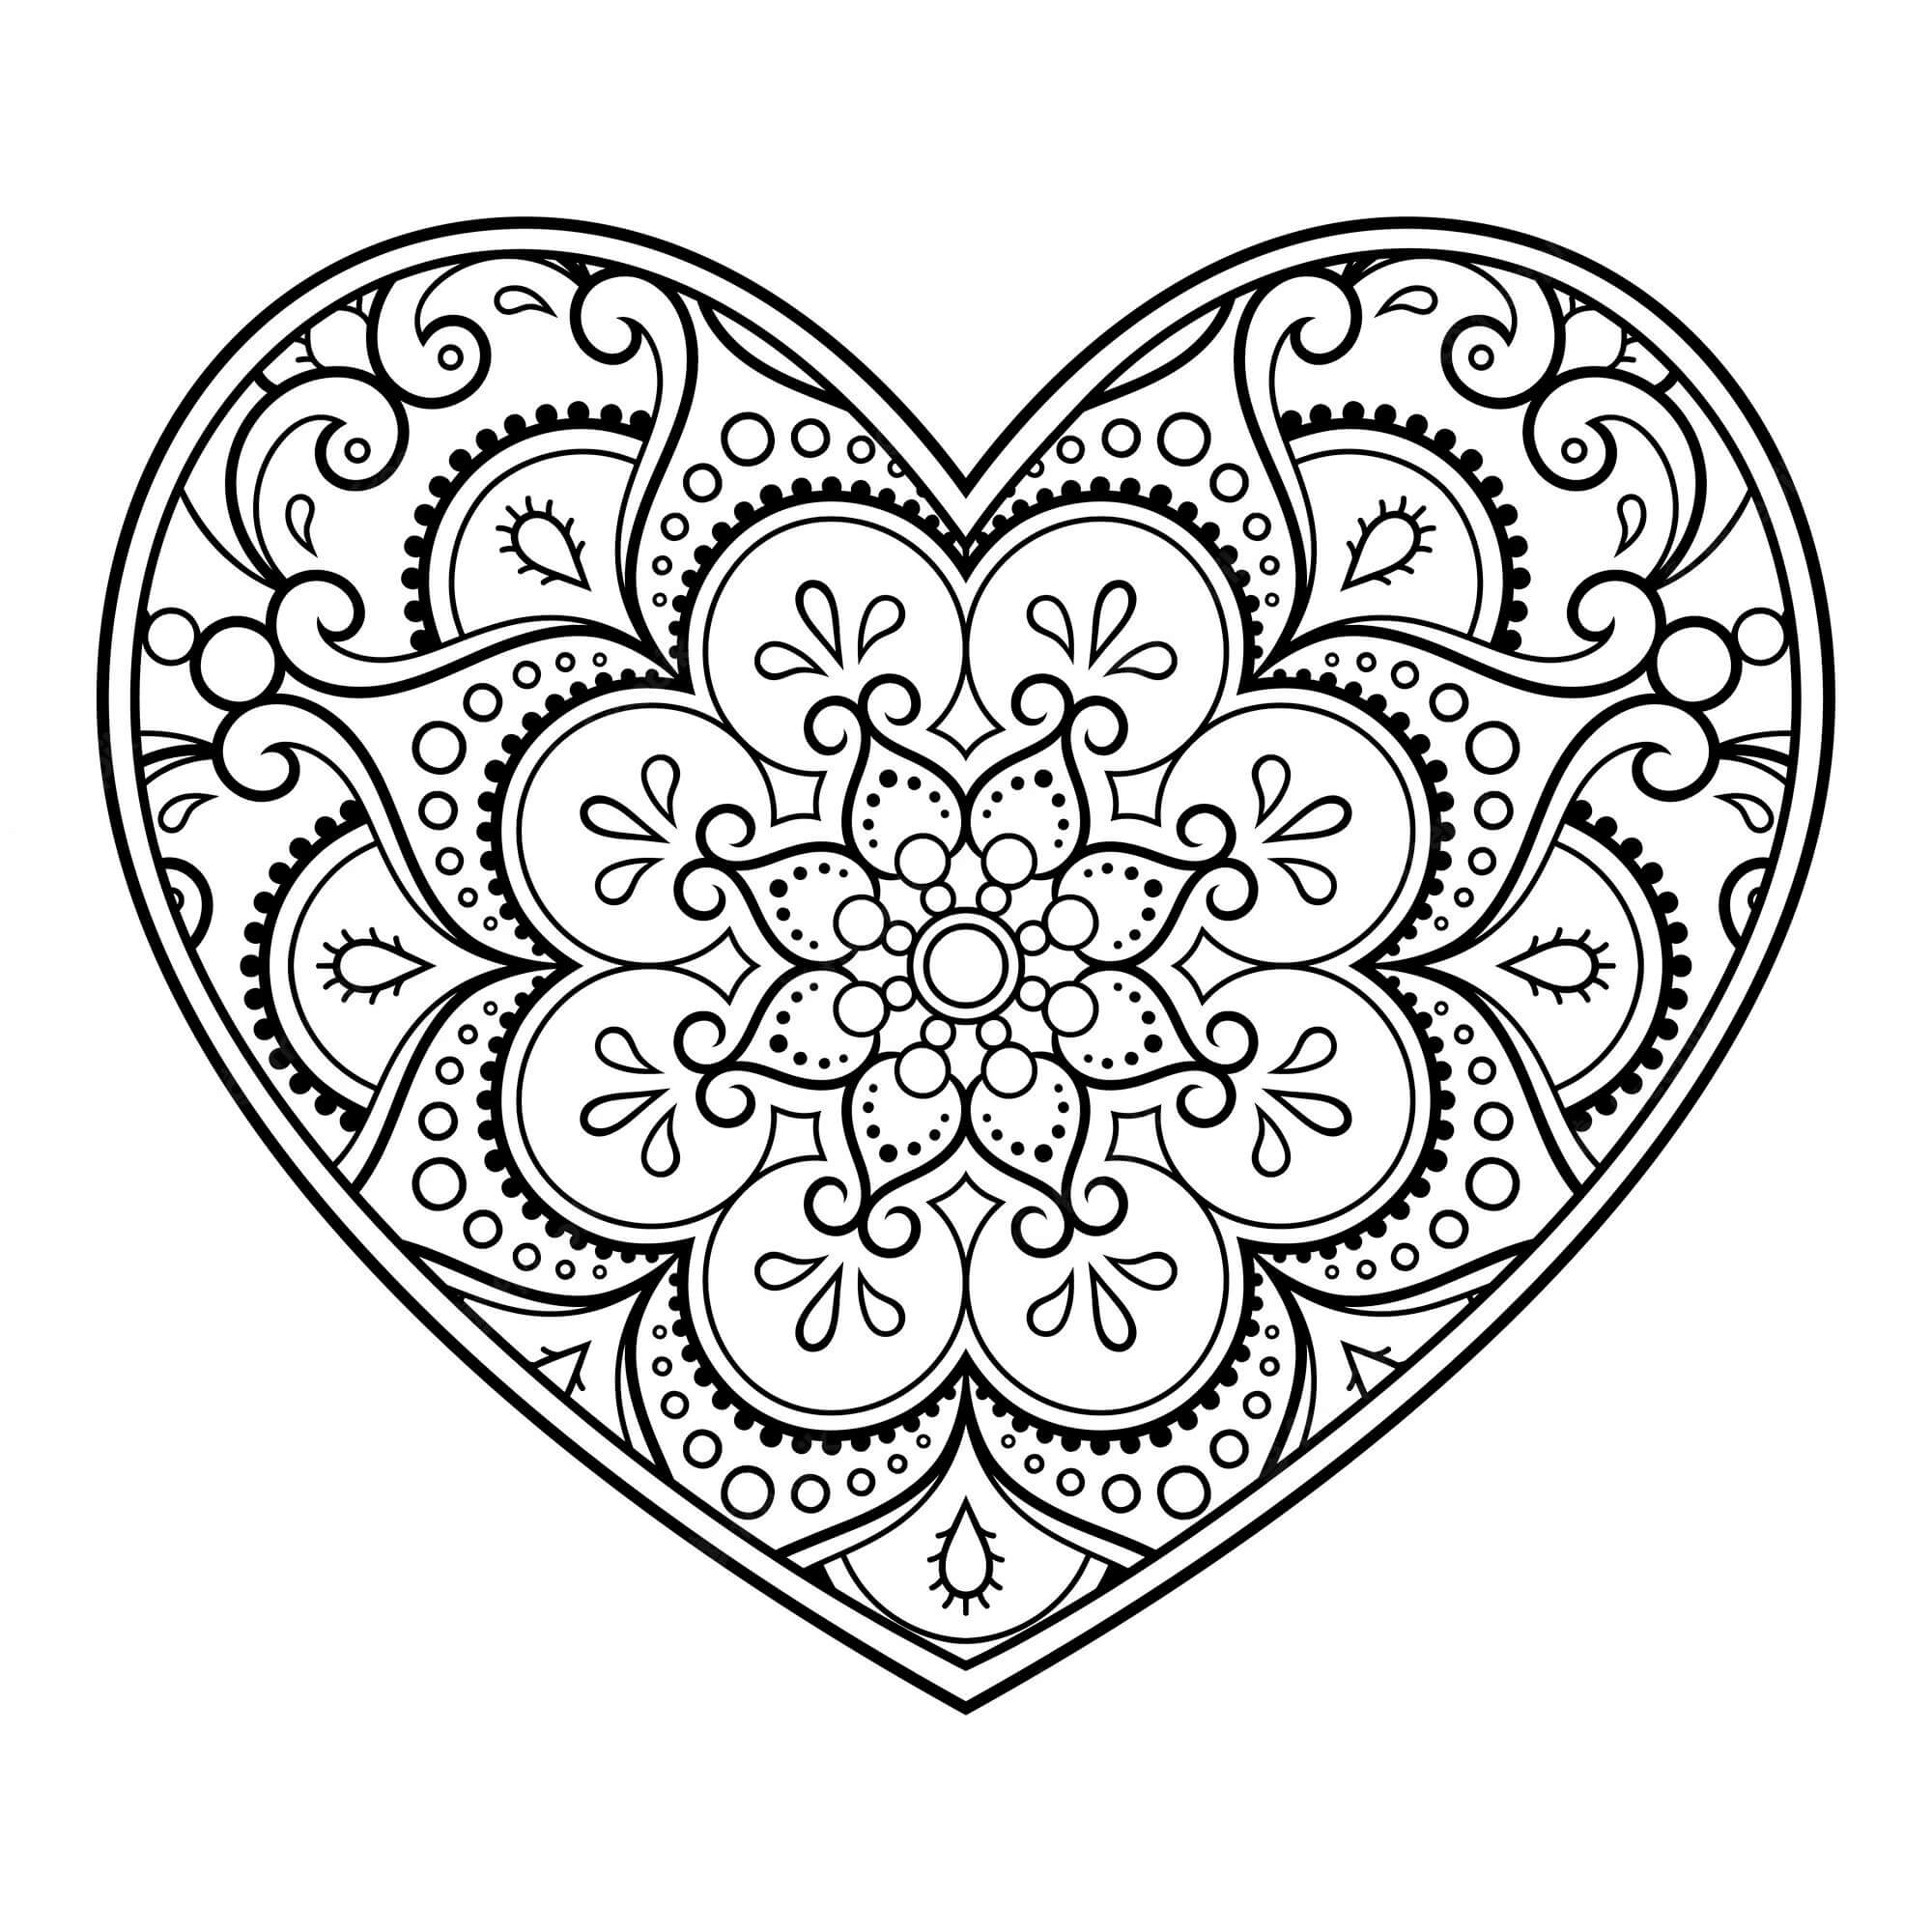 Mandala Heart Coloring Page - Sheet 3 Mandalas